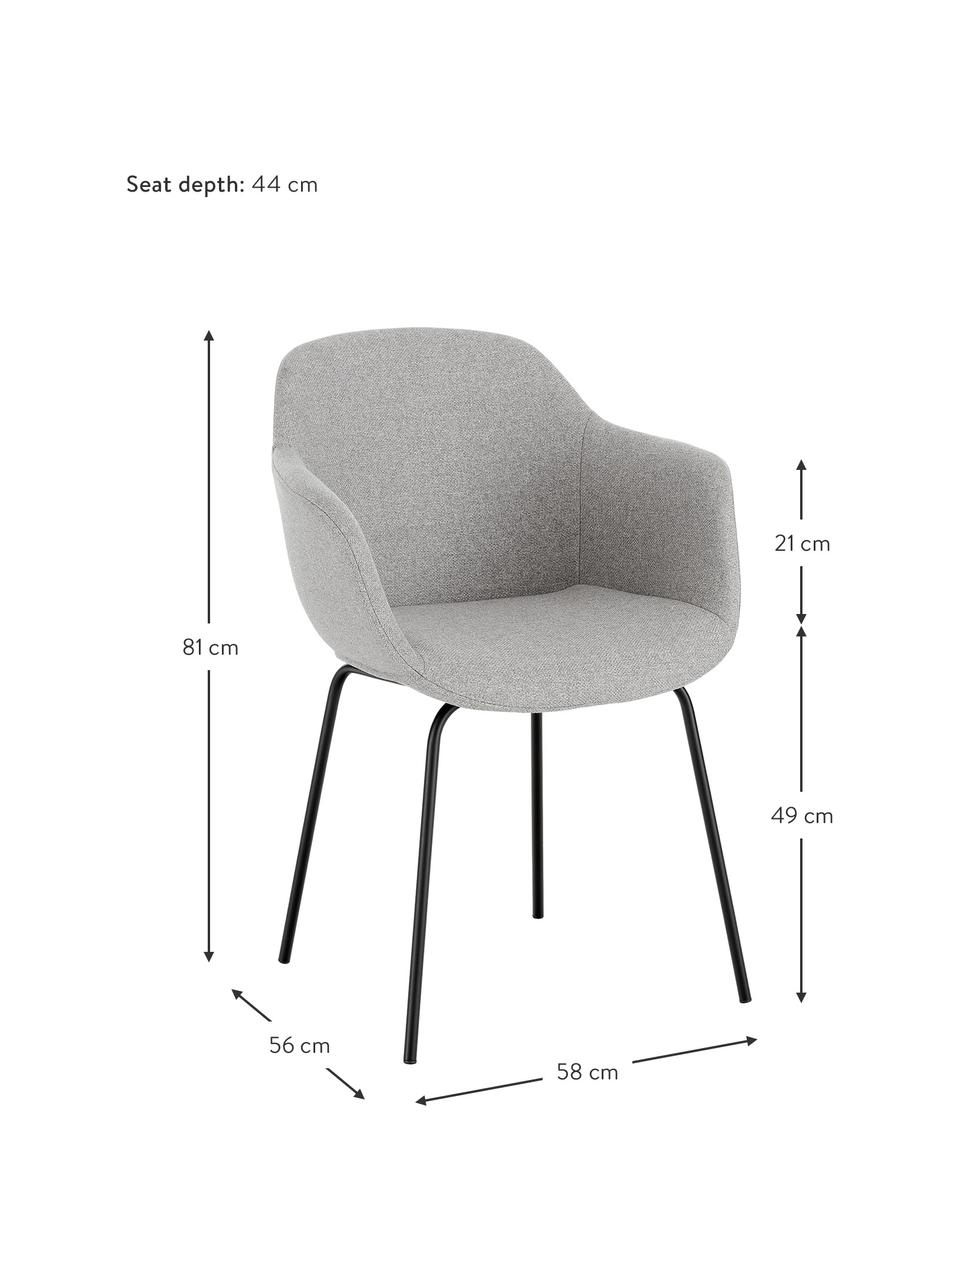 Petite chaise scandinave gris Fiji, Tissu gris clair, larg. 58 x prof. 56 cm